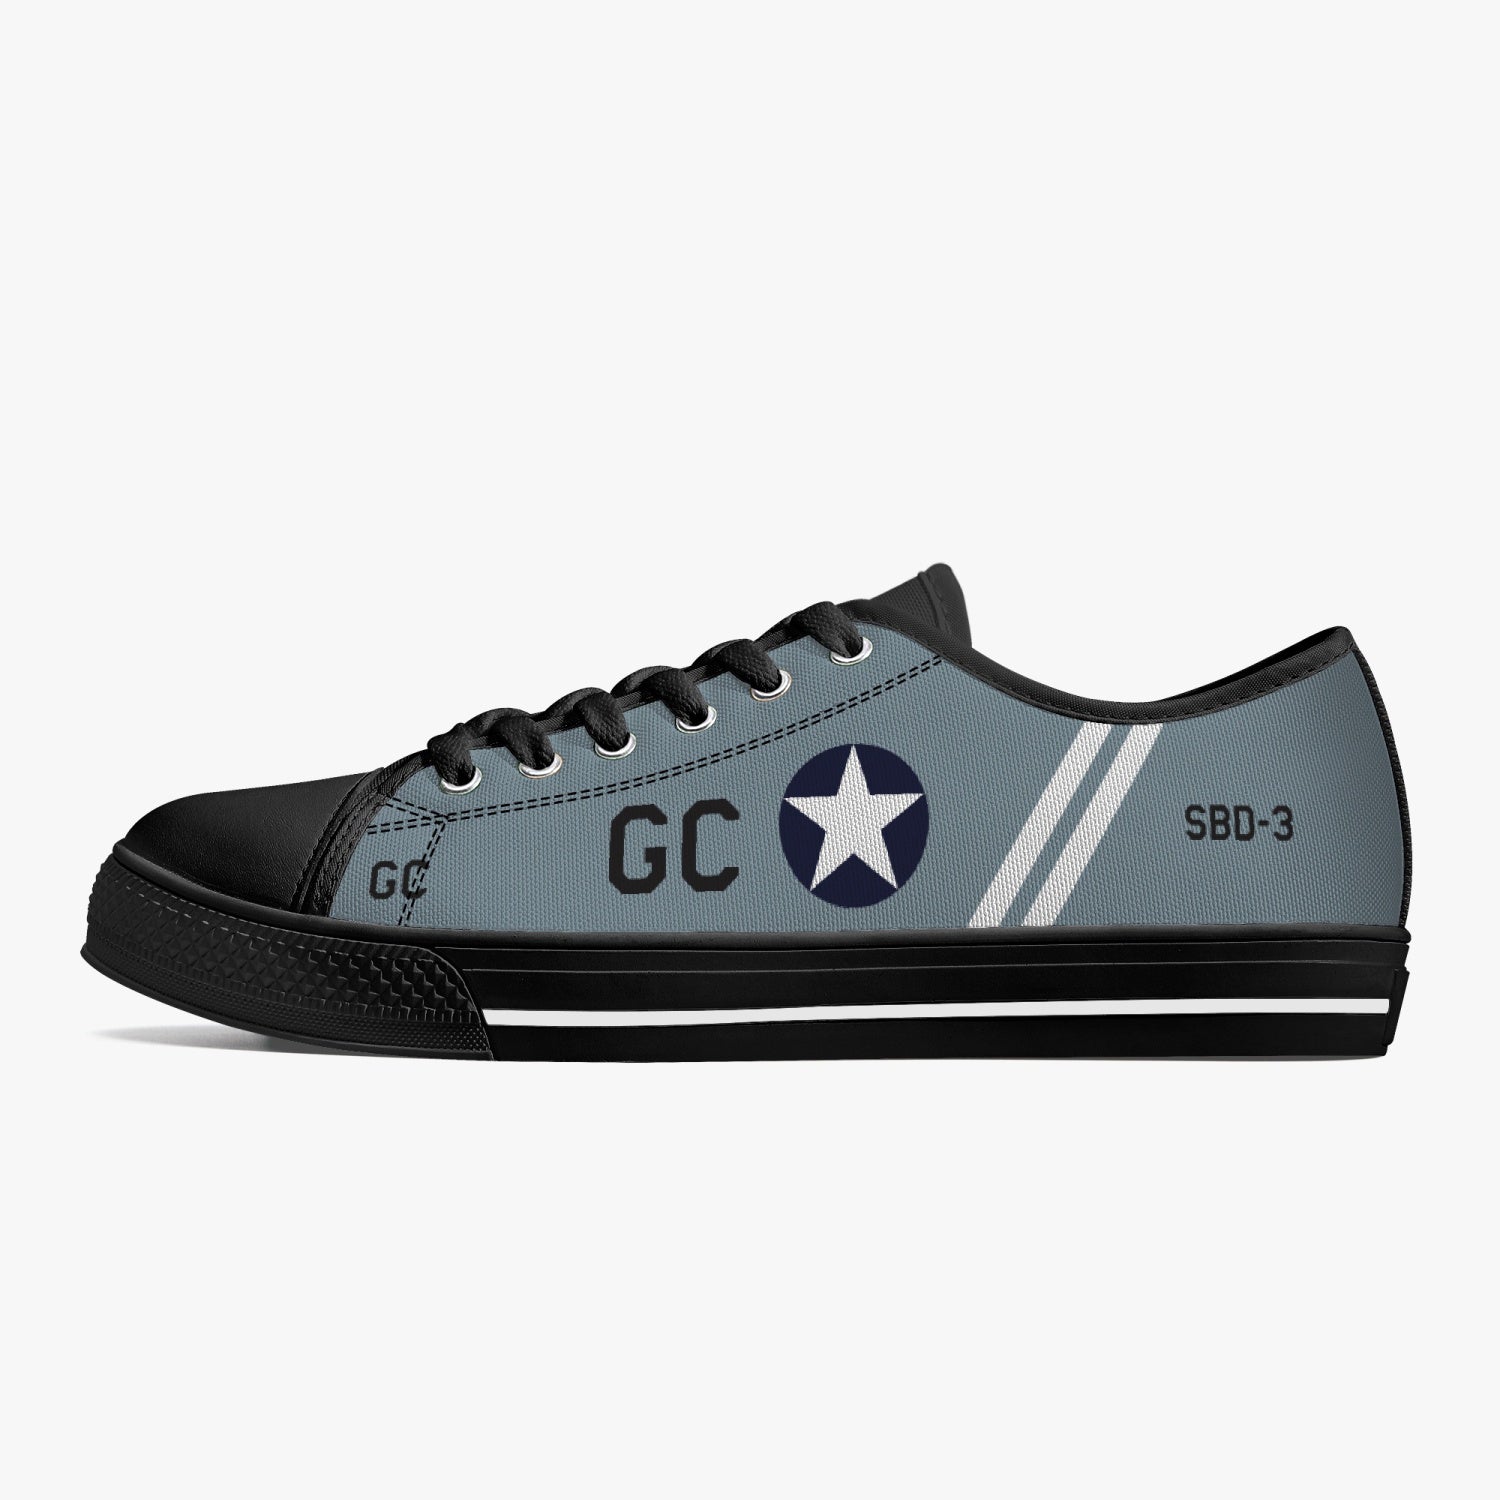 SBD Dauntless "Black GC" Low Top Canvas Shoes - I Love a Hangar